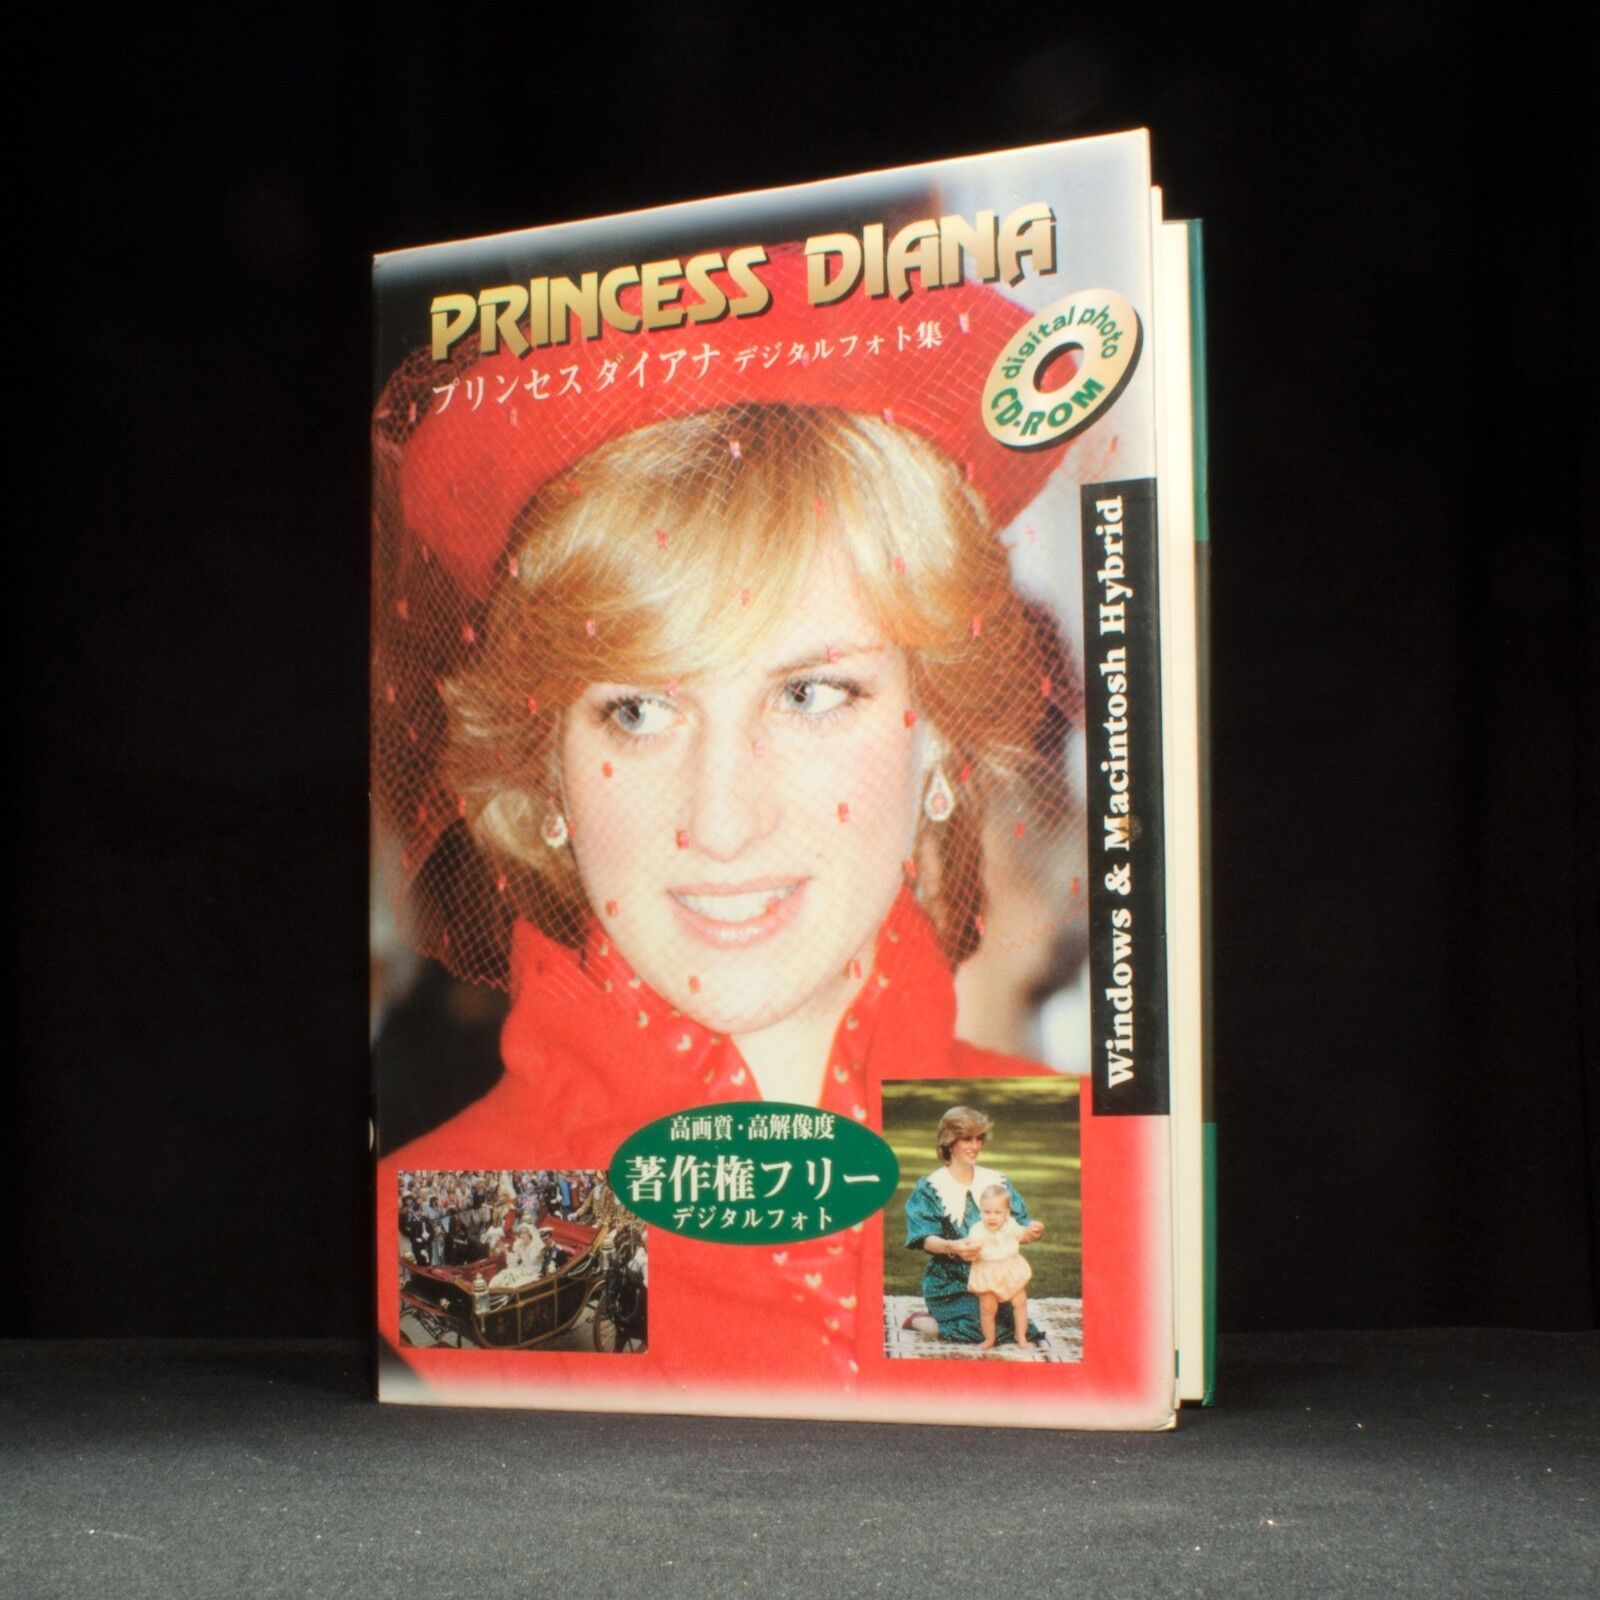 Princess Diana - Digital Photo Library - Photo CD - Mac & PC